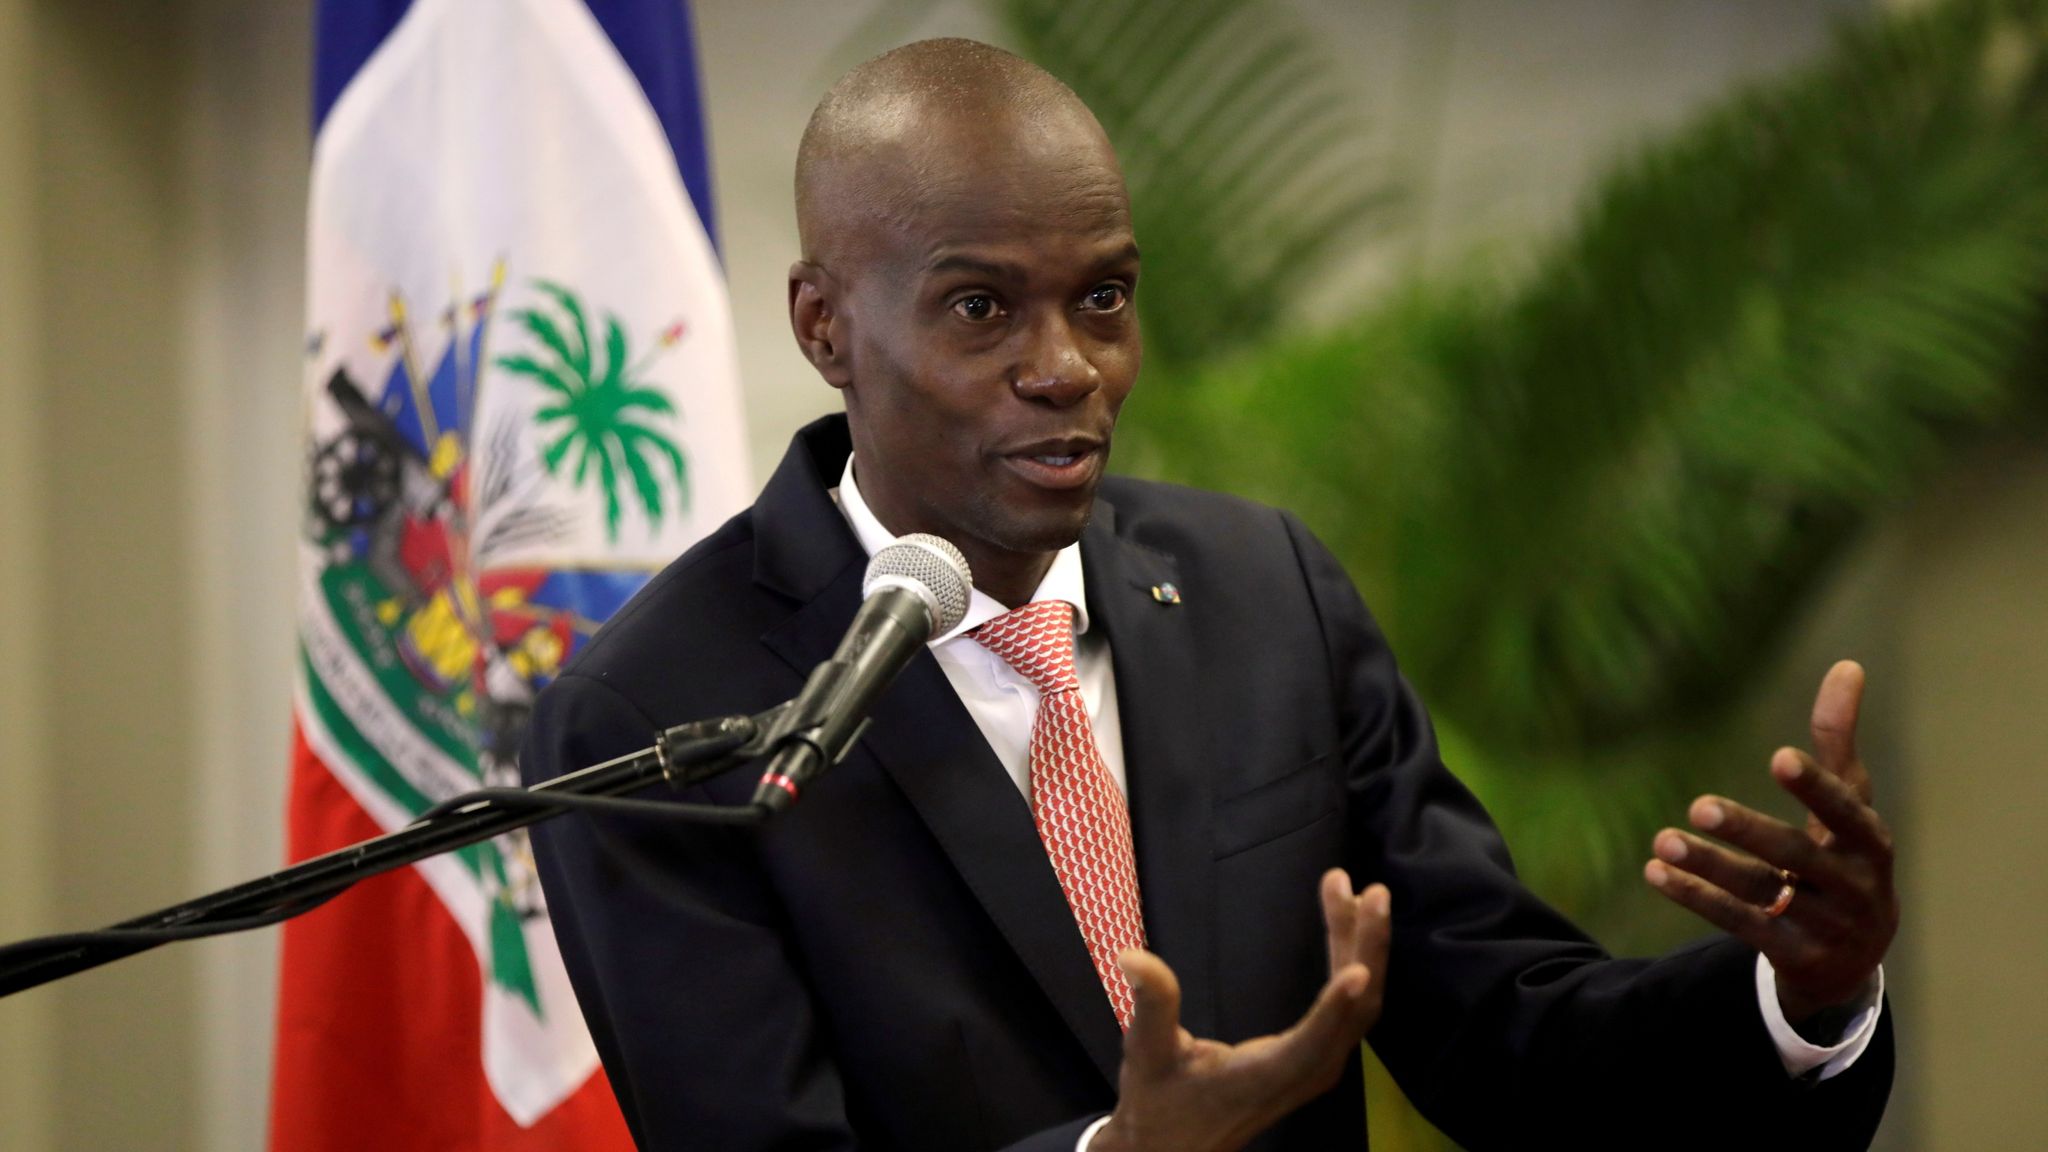 Haiti President: Photos, videos and related news